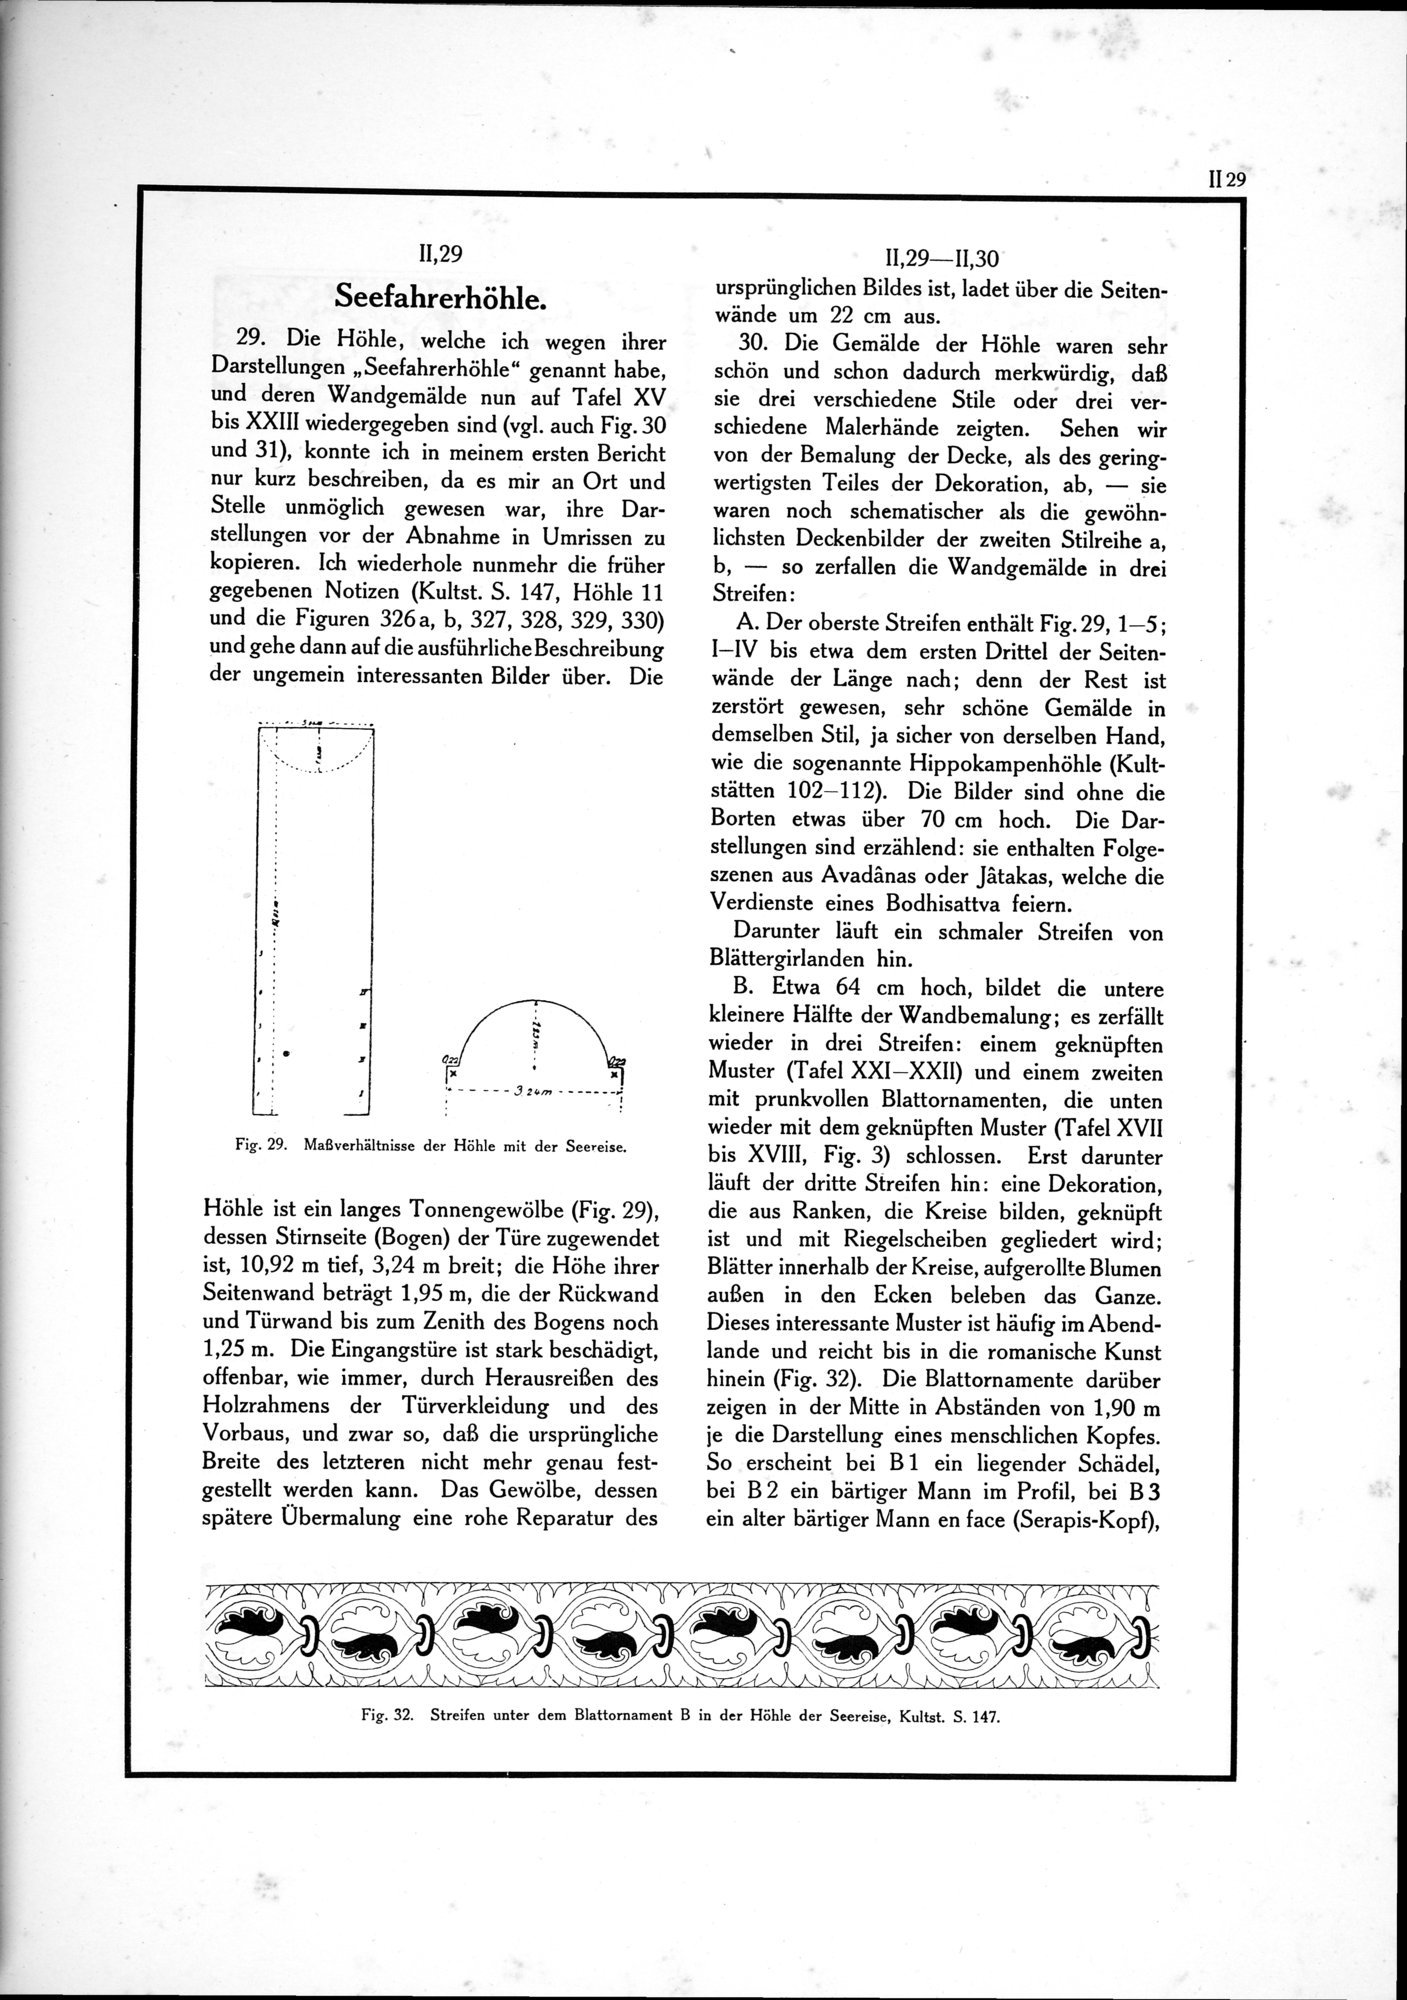 Alt-Kutscha : vol.1 / Page 135 (Grayscale High Resolution Image)